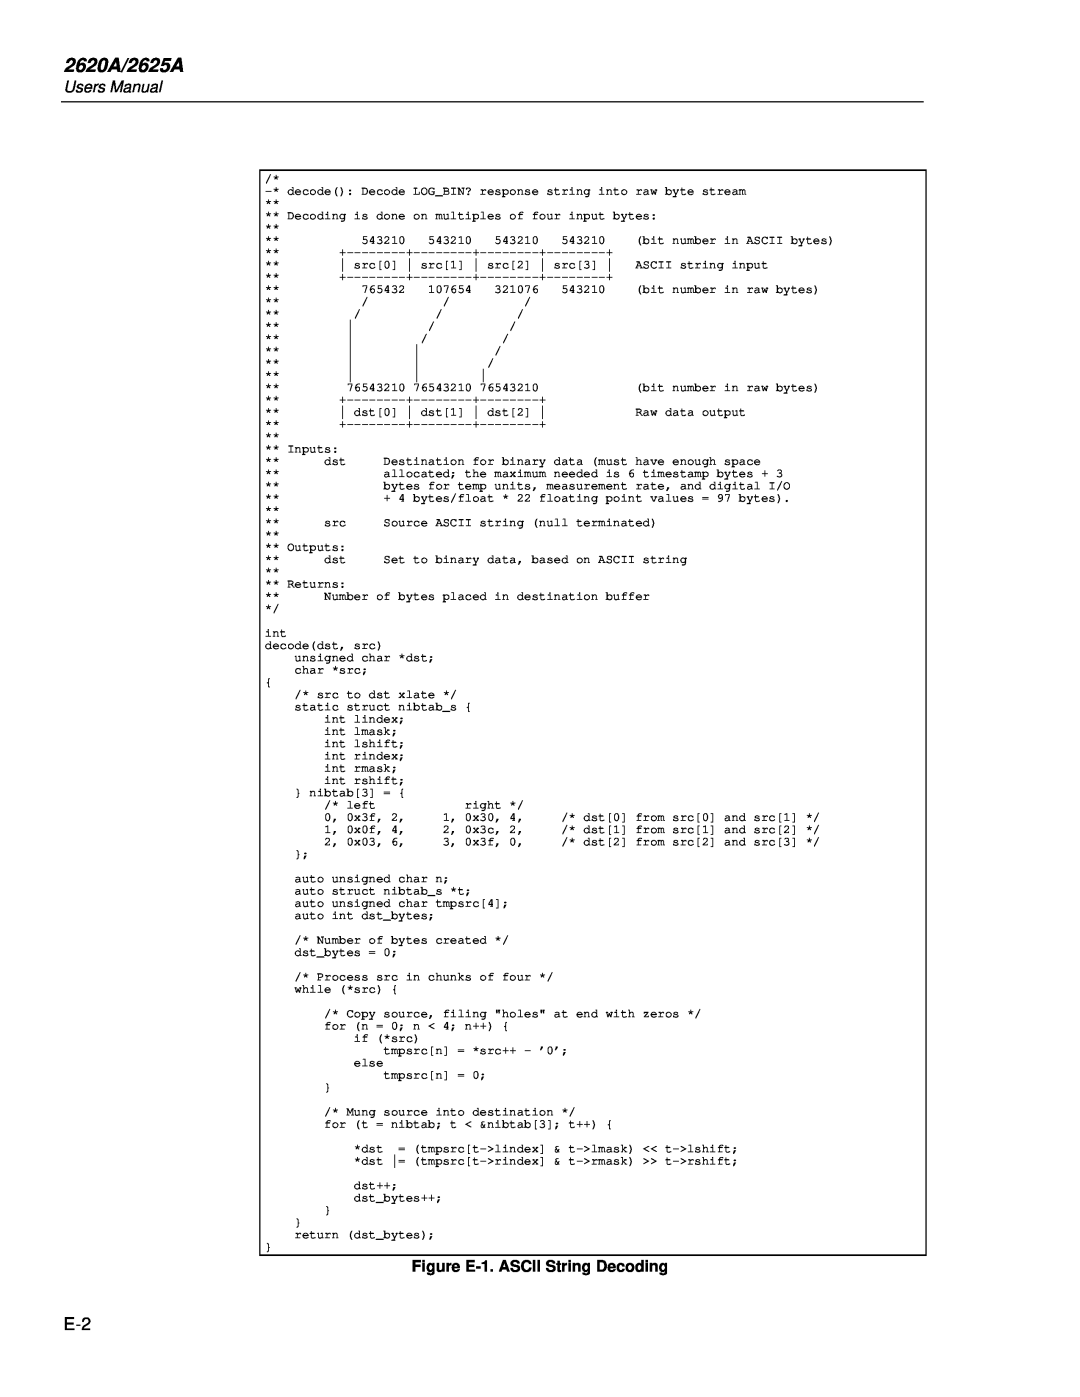 Fluke user manual 2620A/2625A, Figure E-1. ASCII String Decoding 